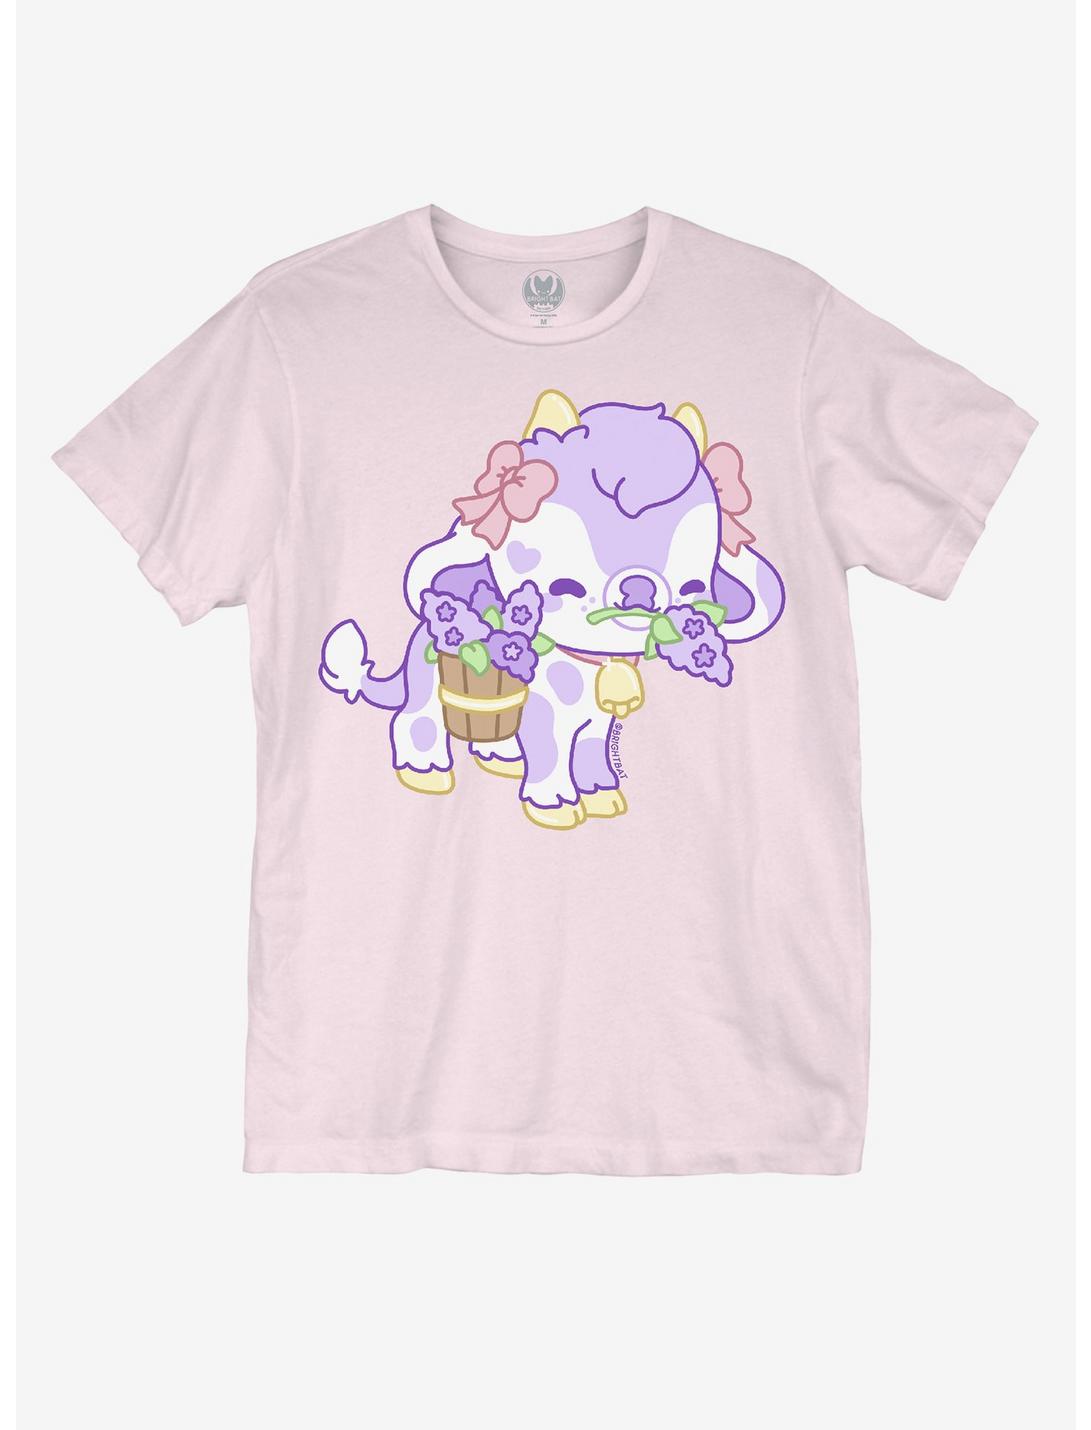 Lavender Cow Boyfriend Fit Girls T-Shirt By Bright Bat Design, MULTI, hi-res